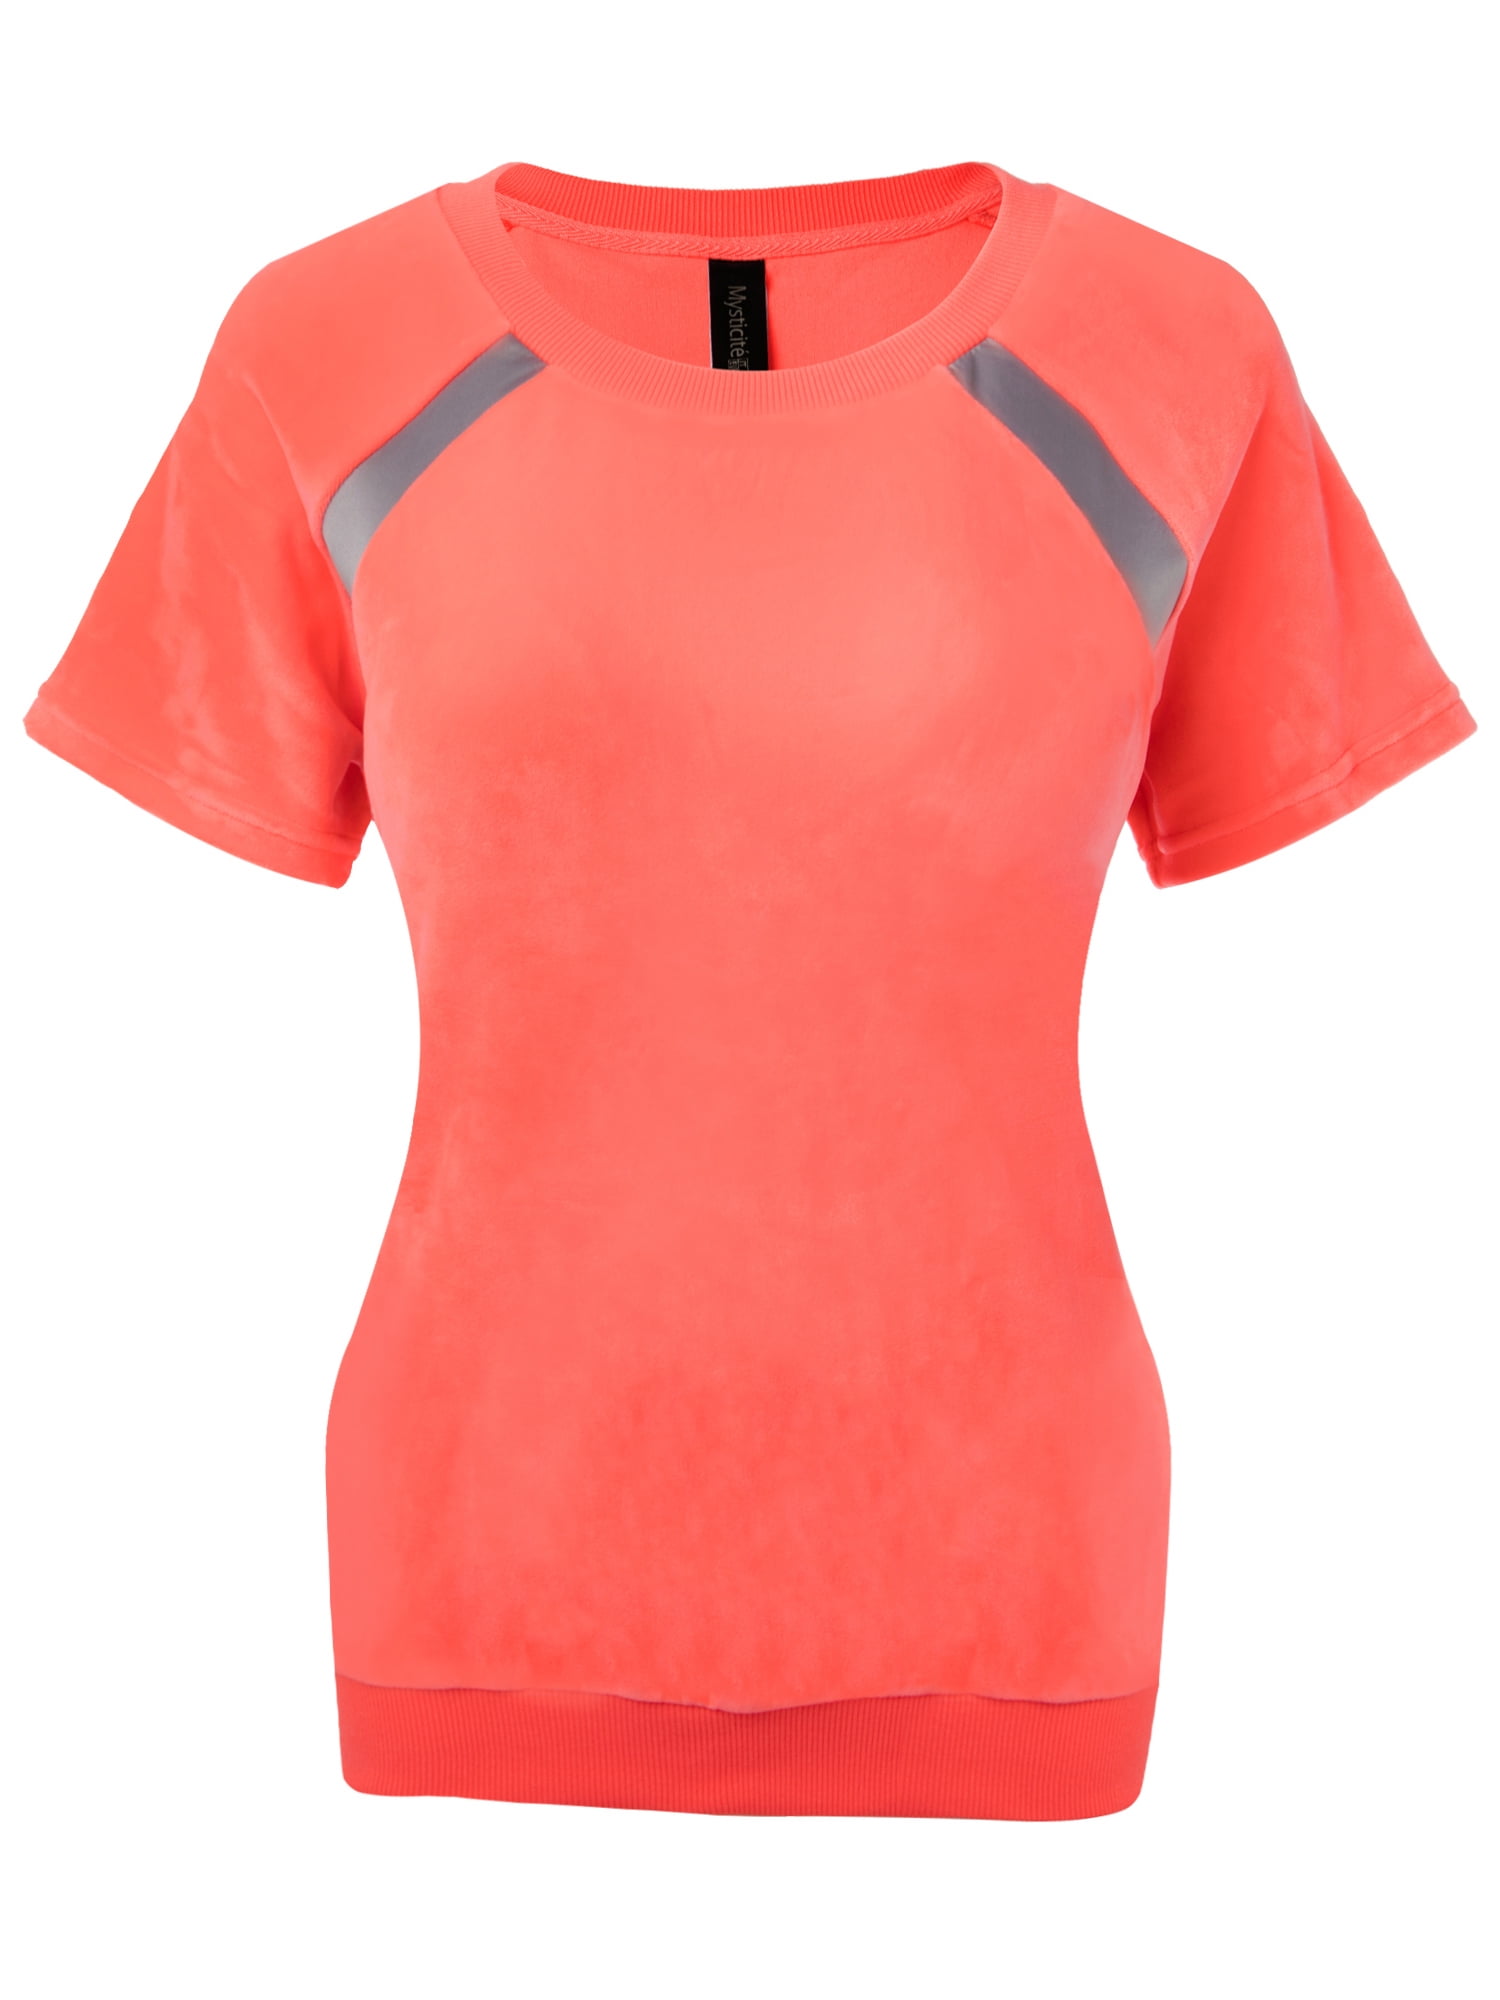 TrainingGirl Women Mesh Racerback Yoga Shirts Short Sleeve Workout Running Tops Loose Fit Sports Athletic Gym Exercise Shirts 